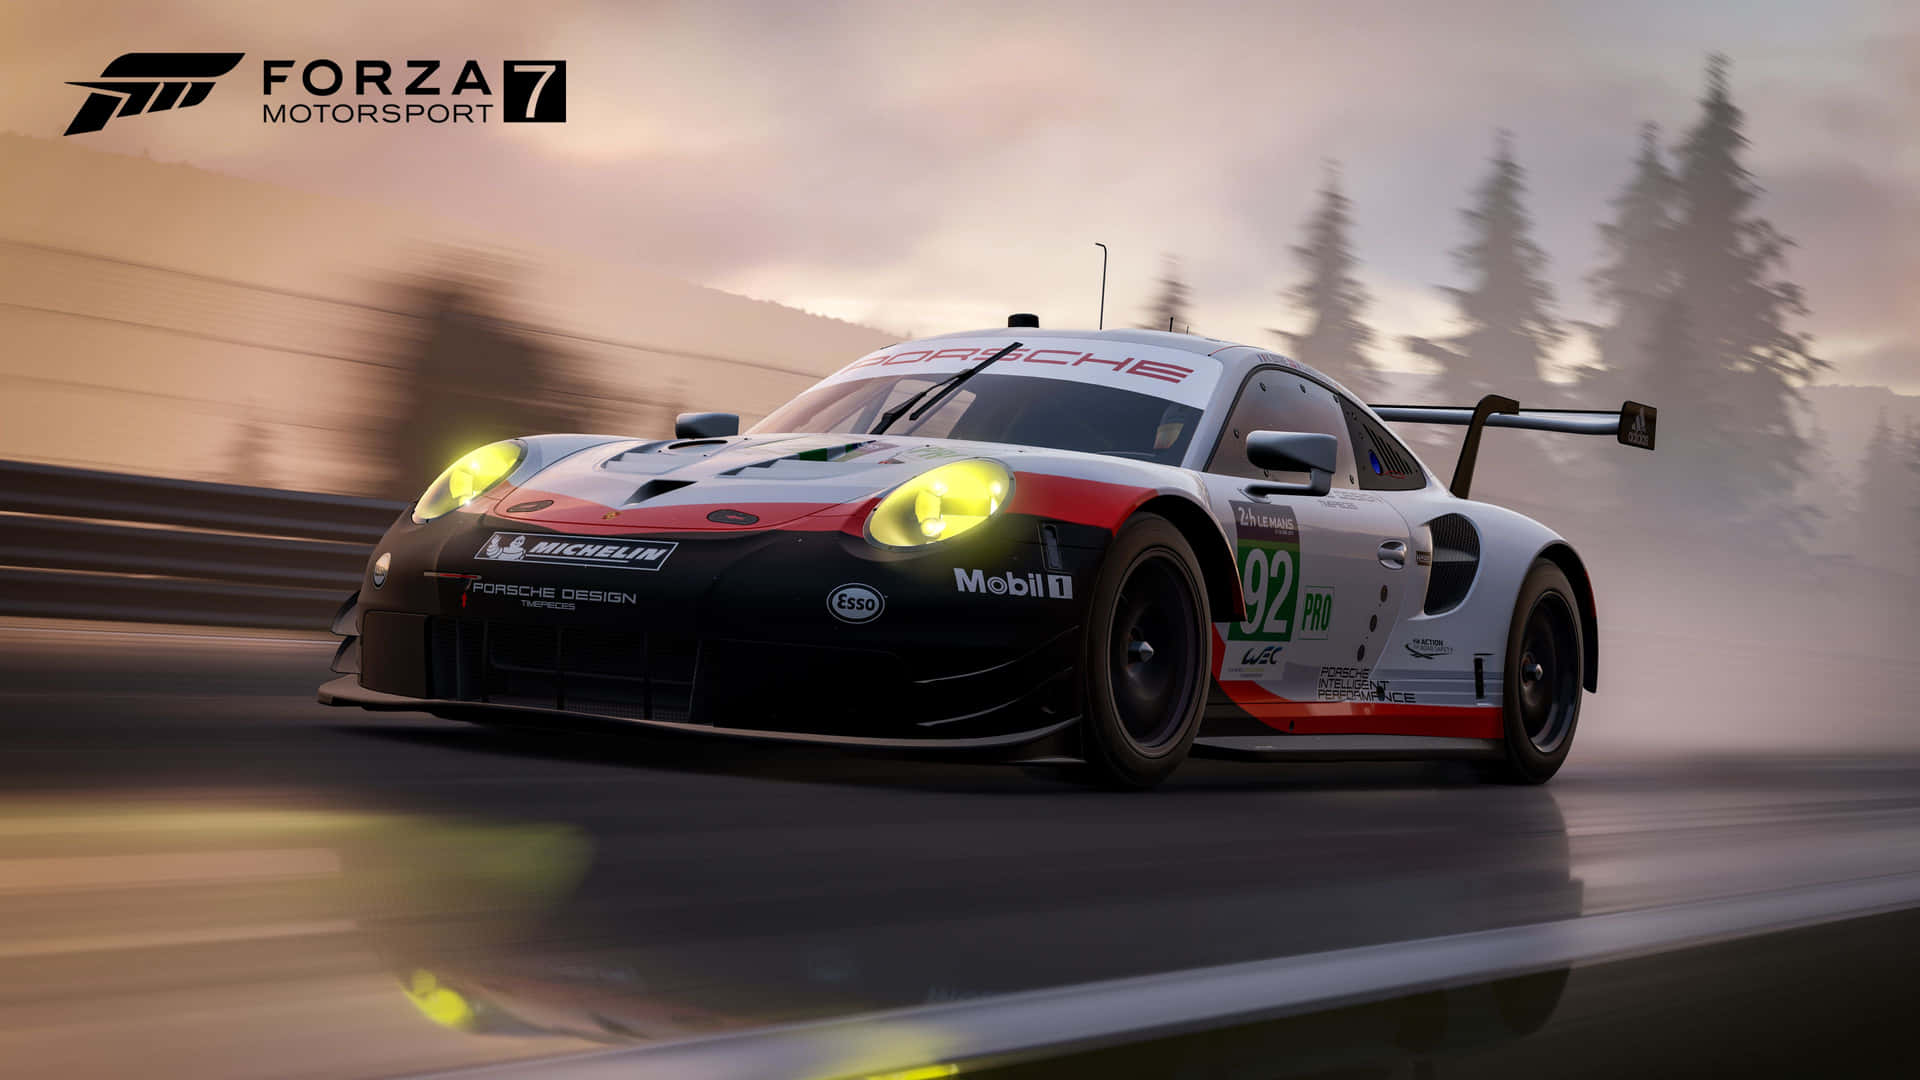 Breathtaking Shot of a Racing Car from Forza Motorsport Wallpaper